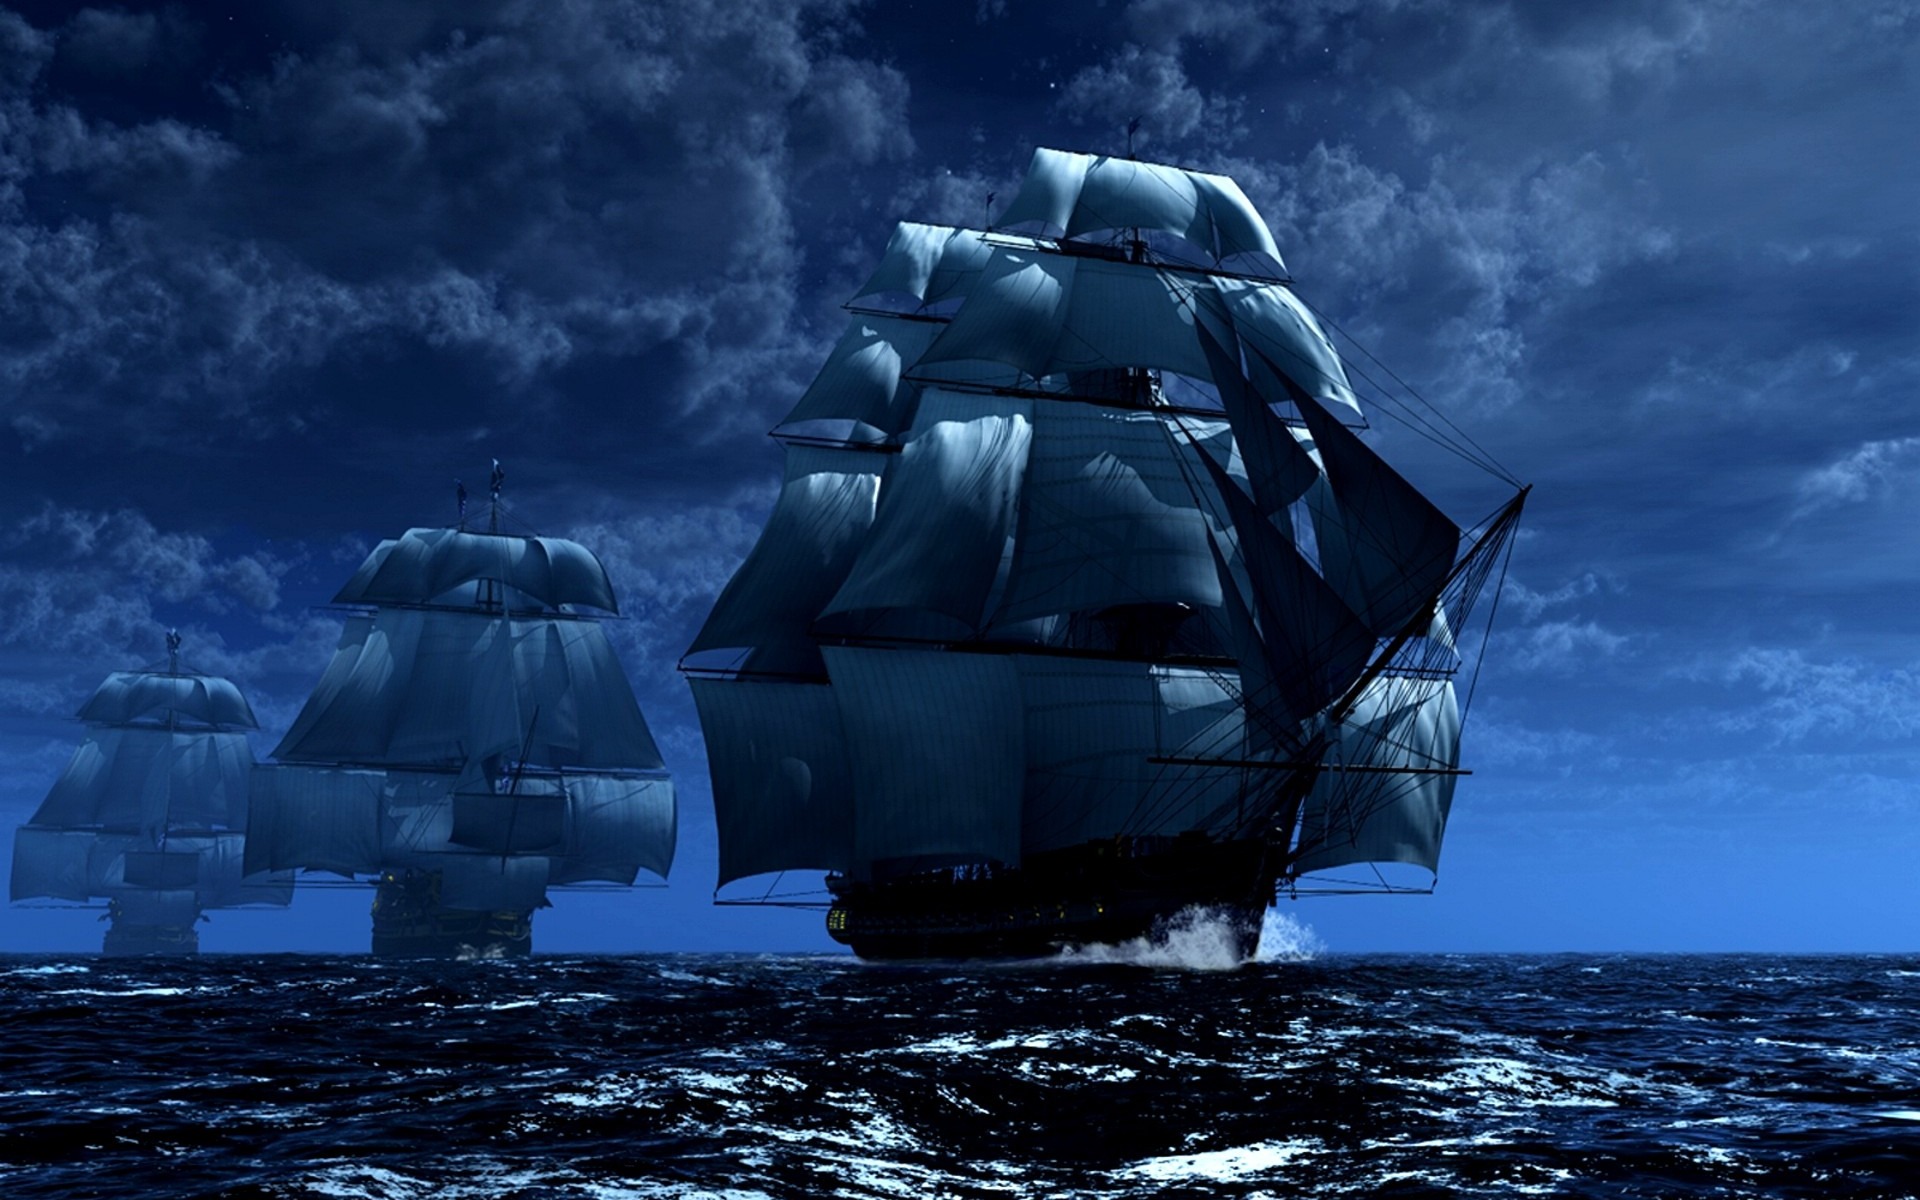 The sailing ships Desktop wallpapers 640x480